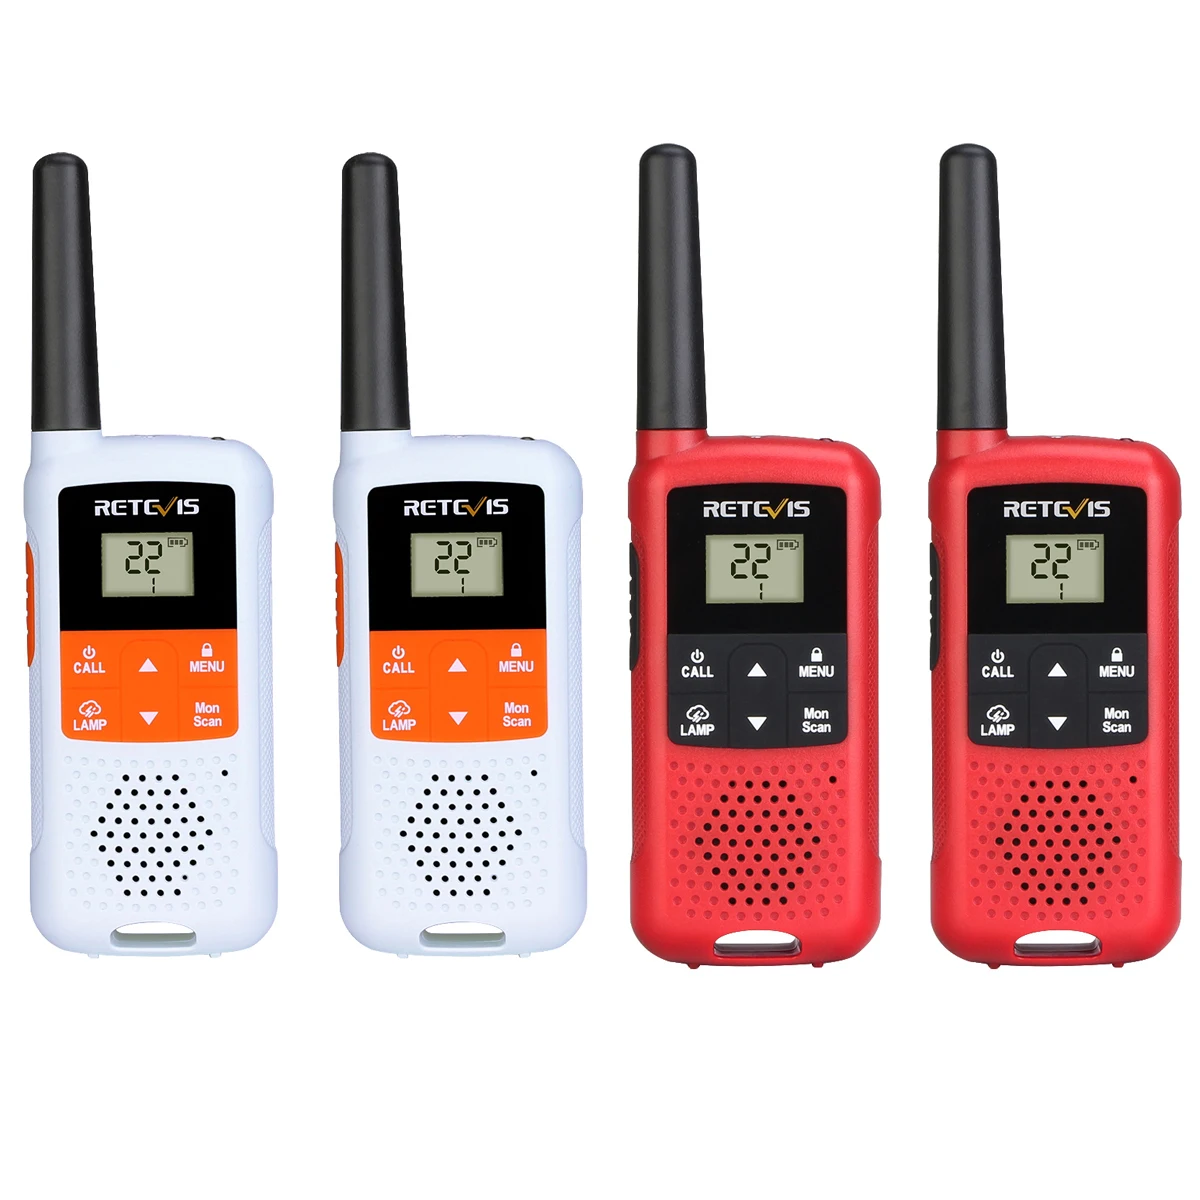 

Outdoor NOAA walkie talkie Retevis RT49B License-free FRS Handheld Two Way Radio communication 22CH VOX Radio 1000mAh Monitor, White/red